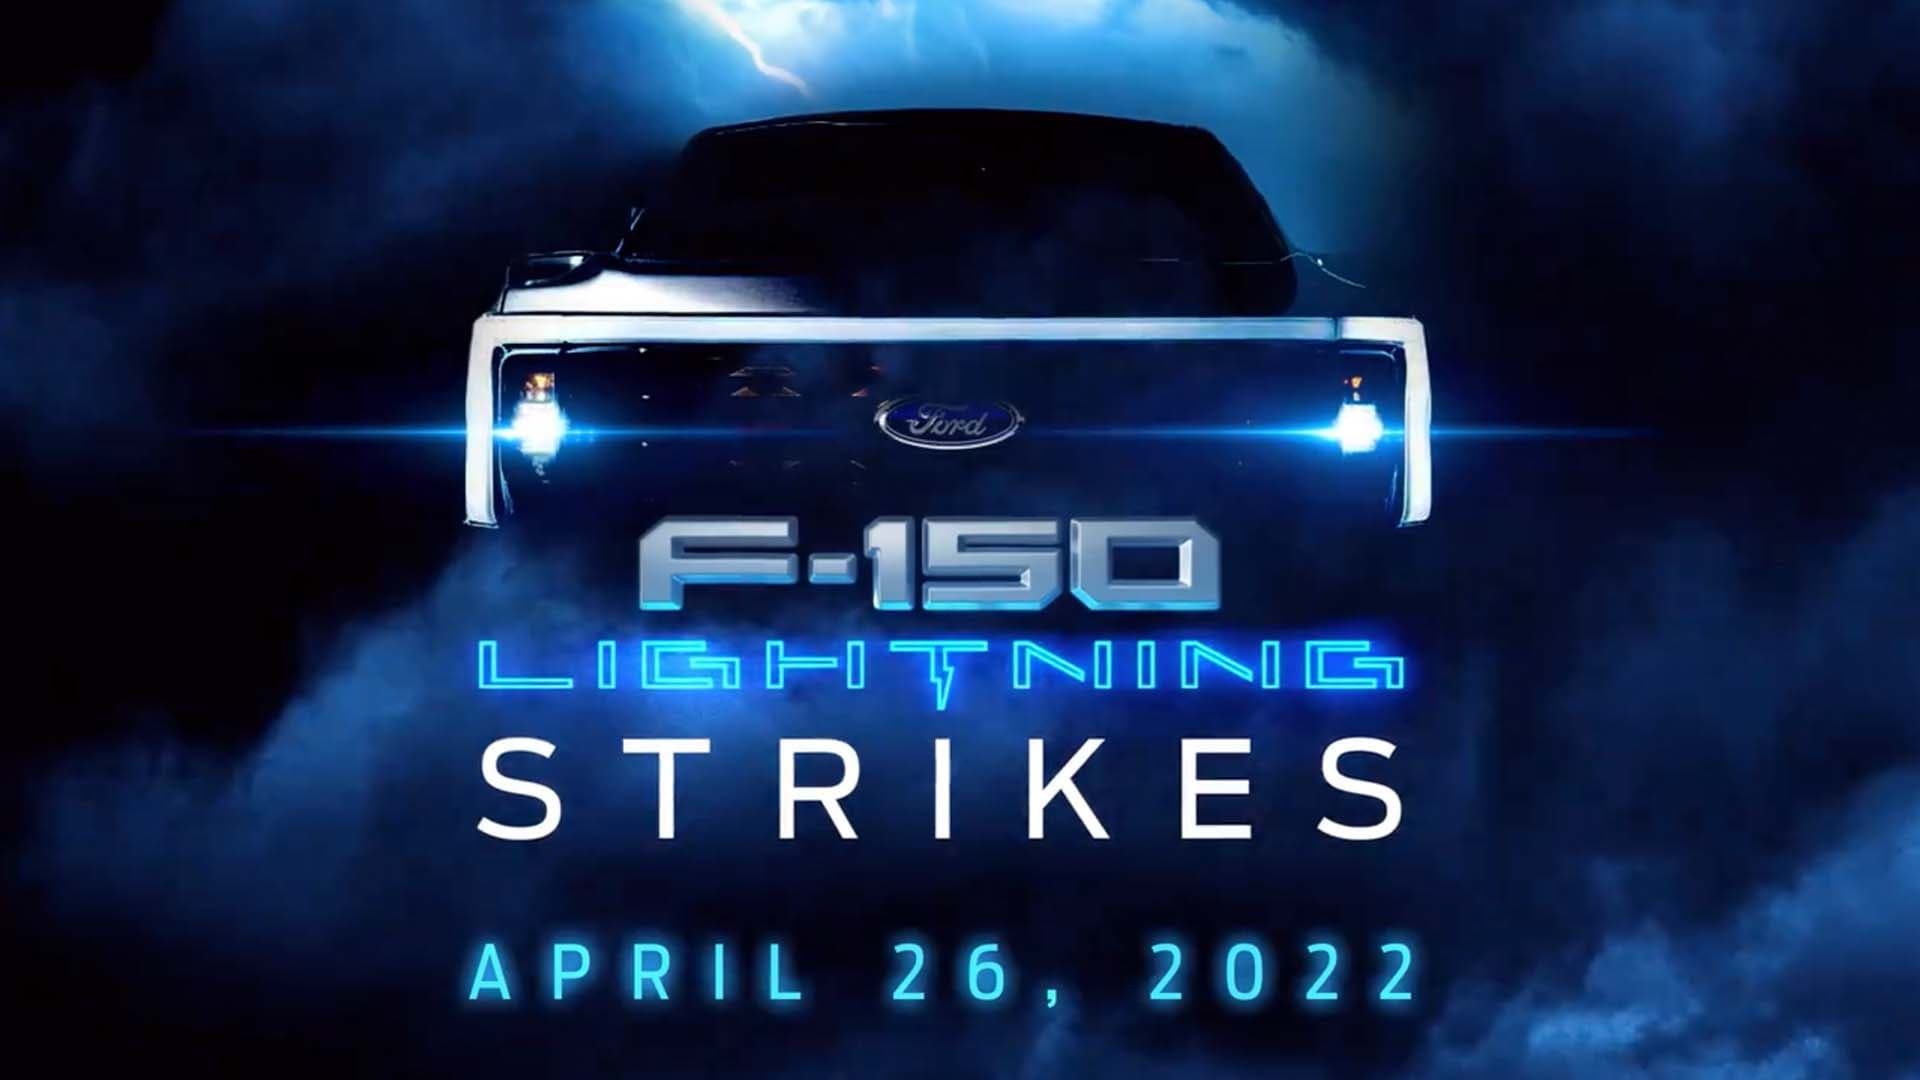 2022 Ford F-150 Lightning Production Finally Kicks Off April 26